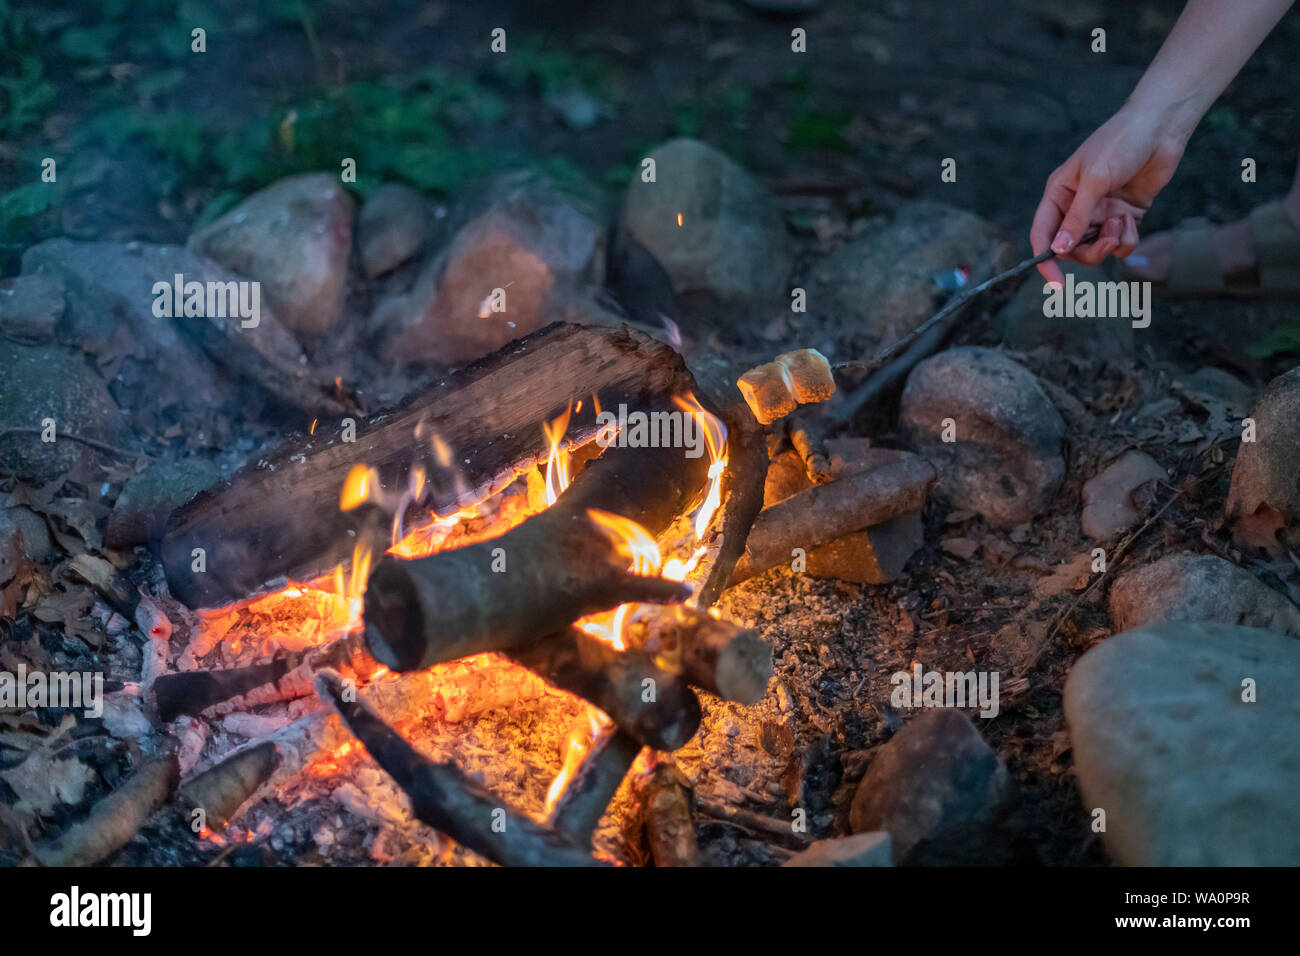 Prairieville, Michigan - Toasting marshmallows on a campfire. Stock Photo